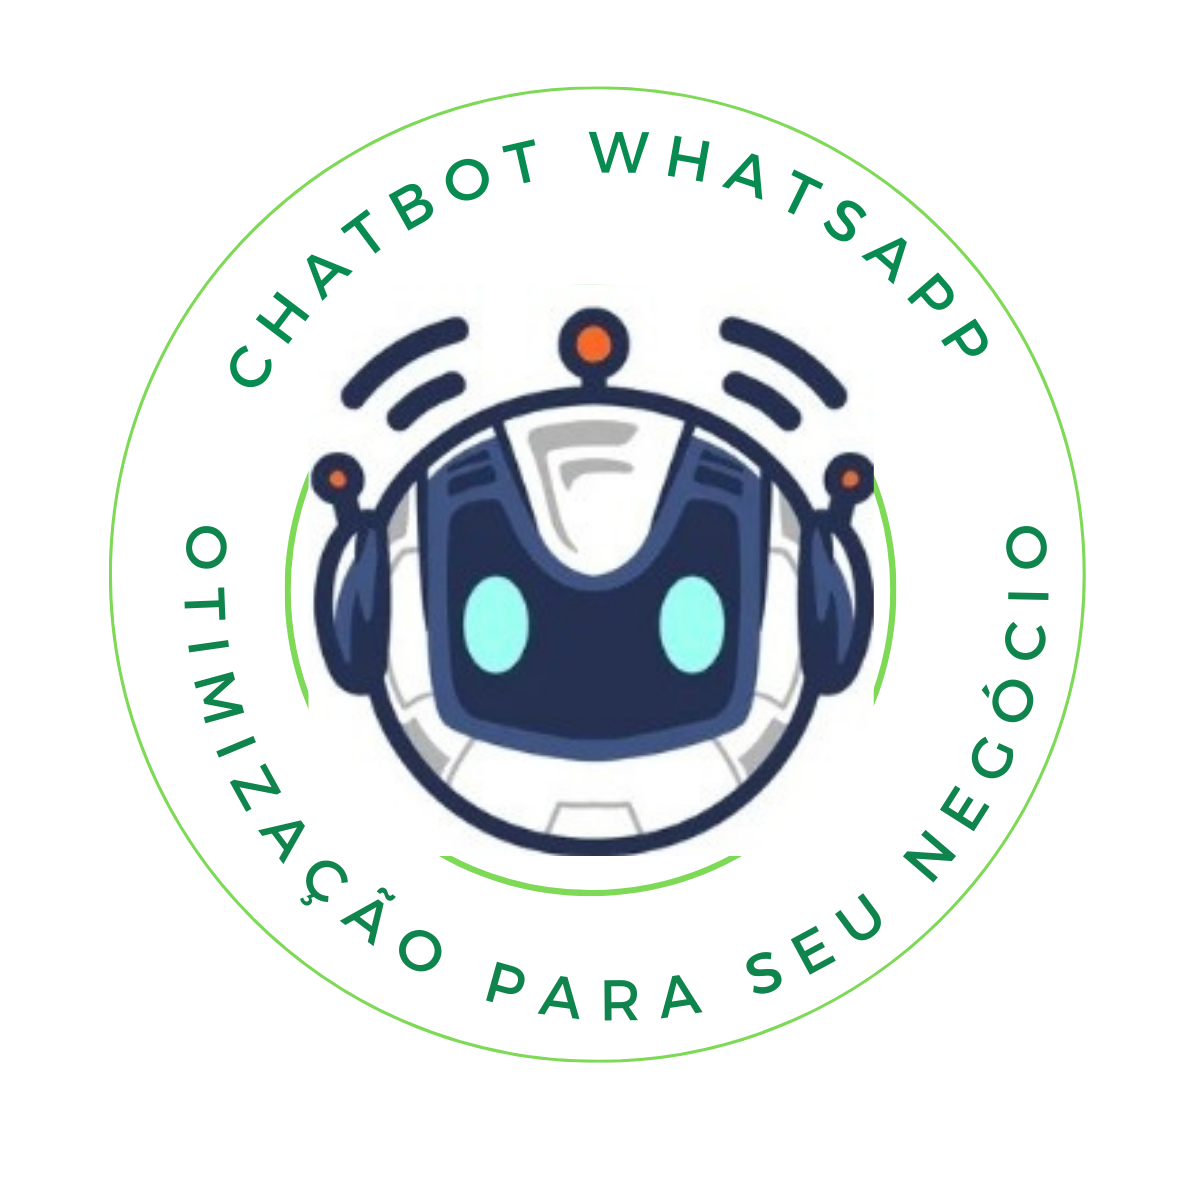 Robo whatsapp business